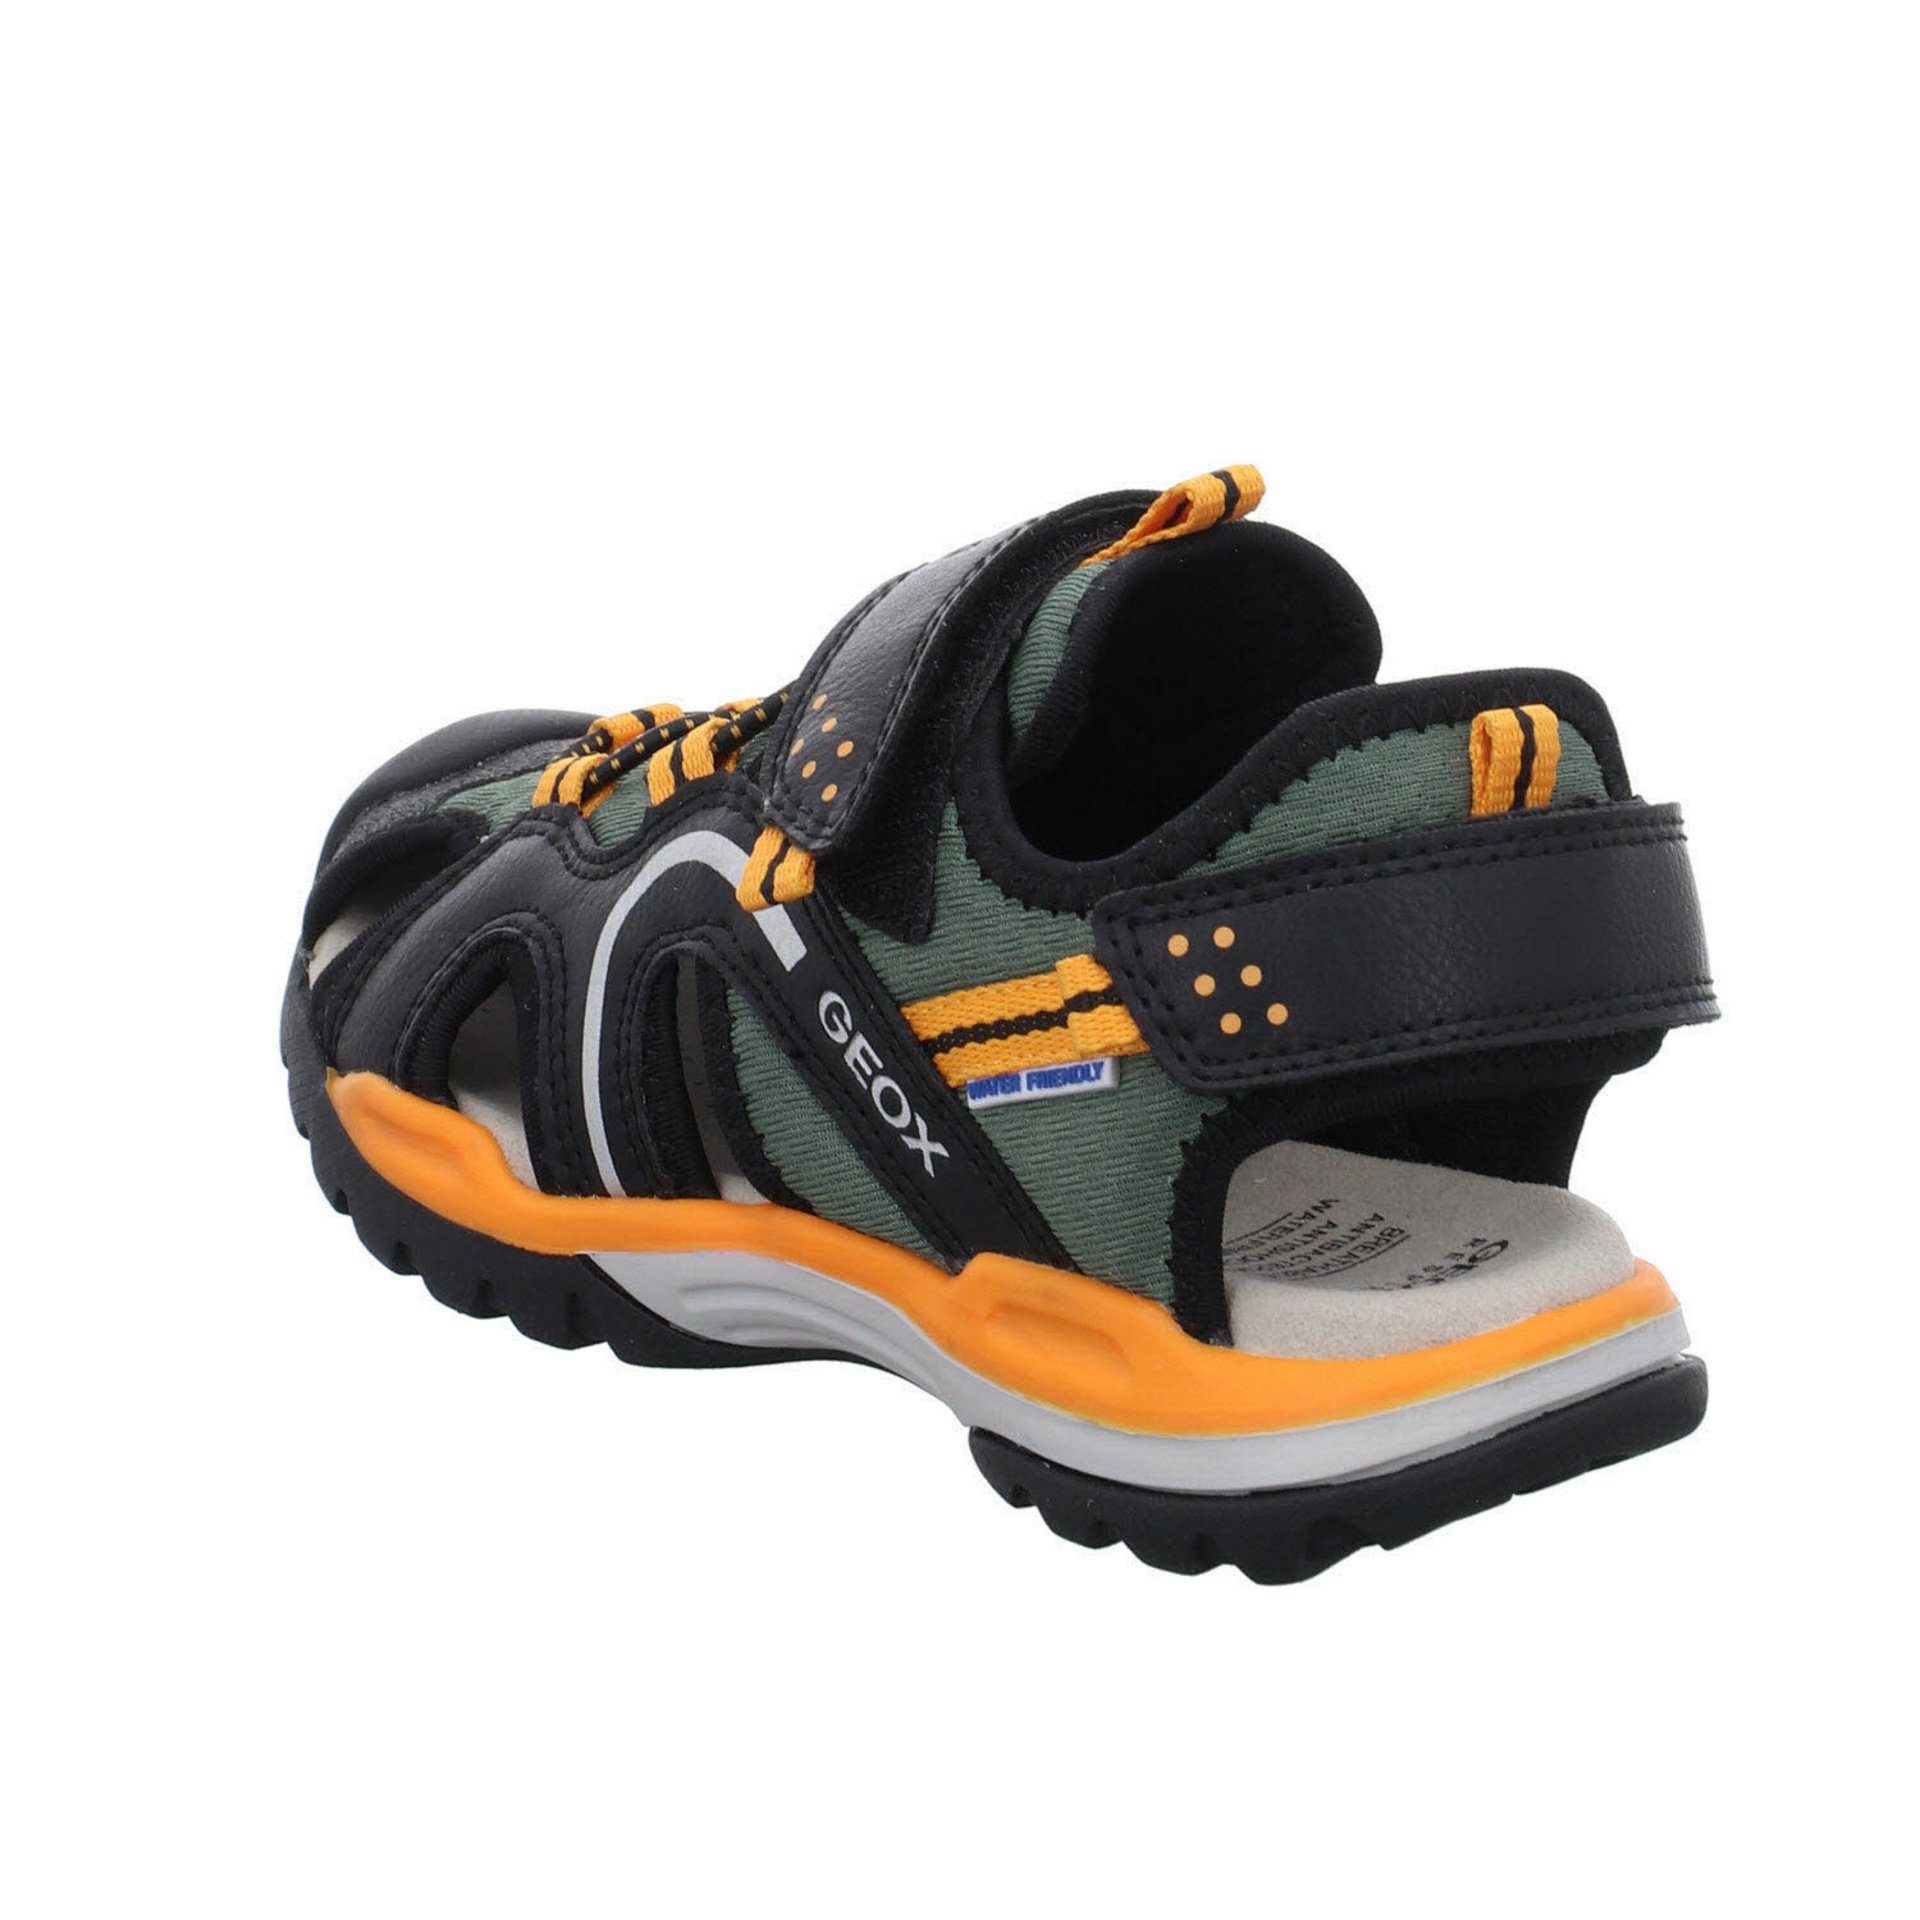 Geox Borealis Sandale Orange Sandalen Synthetikkombination Jungen Schuhe Schwarz Outdoorsandale